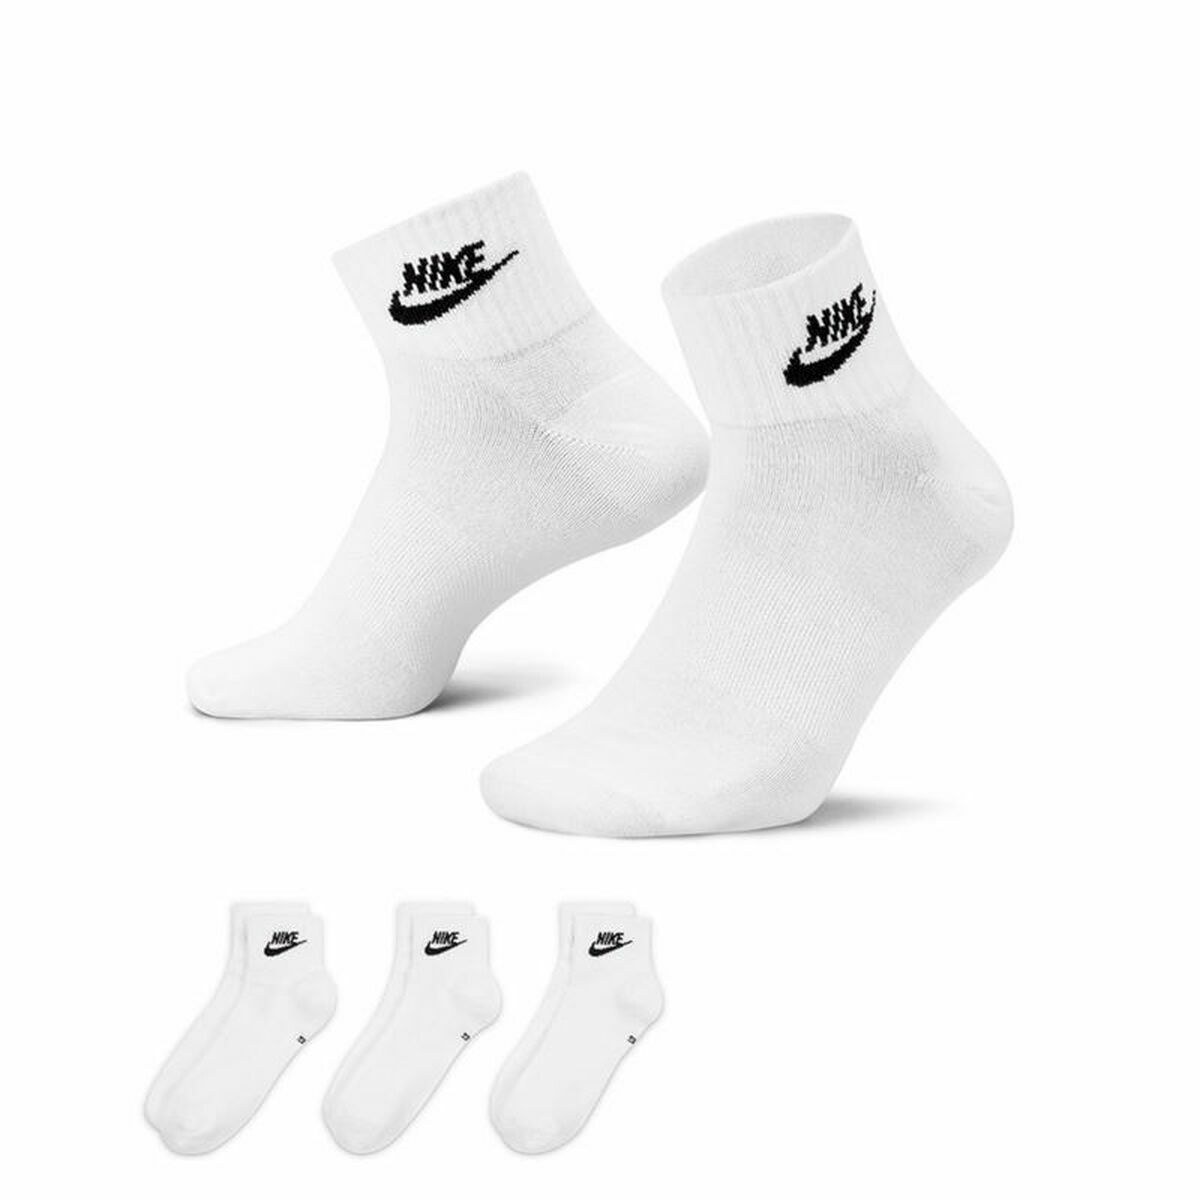 Calzini Nike Everyday Essential Bianco